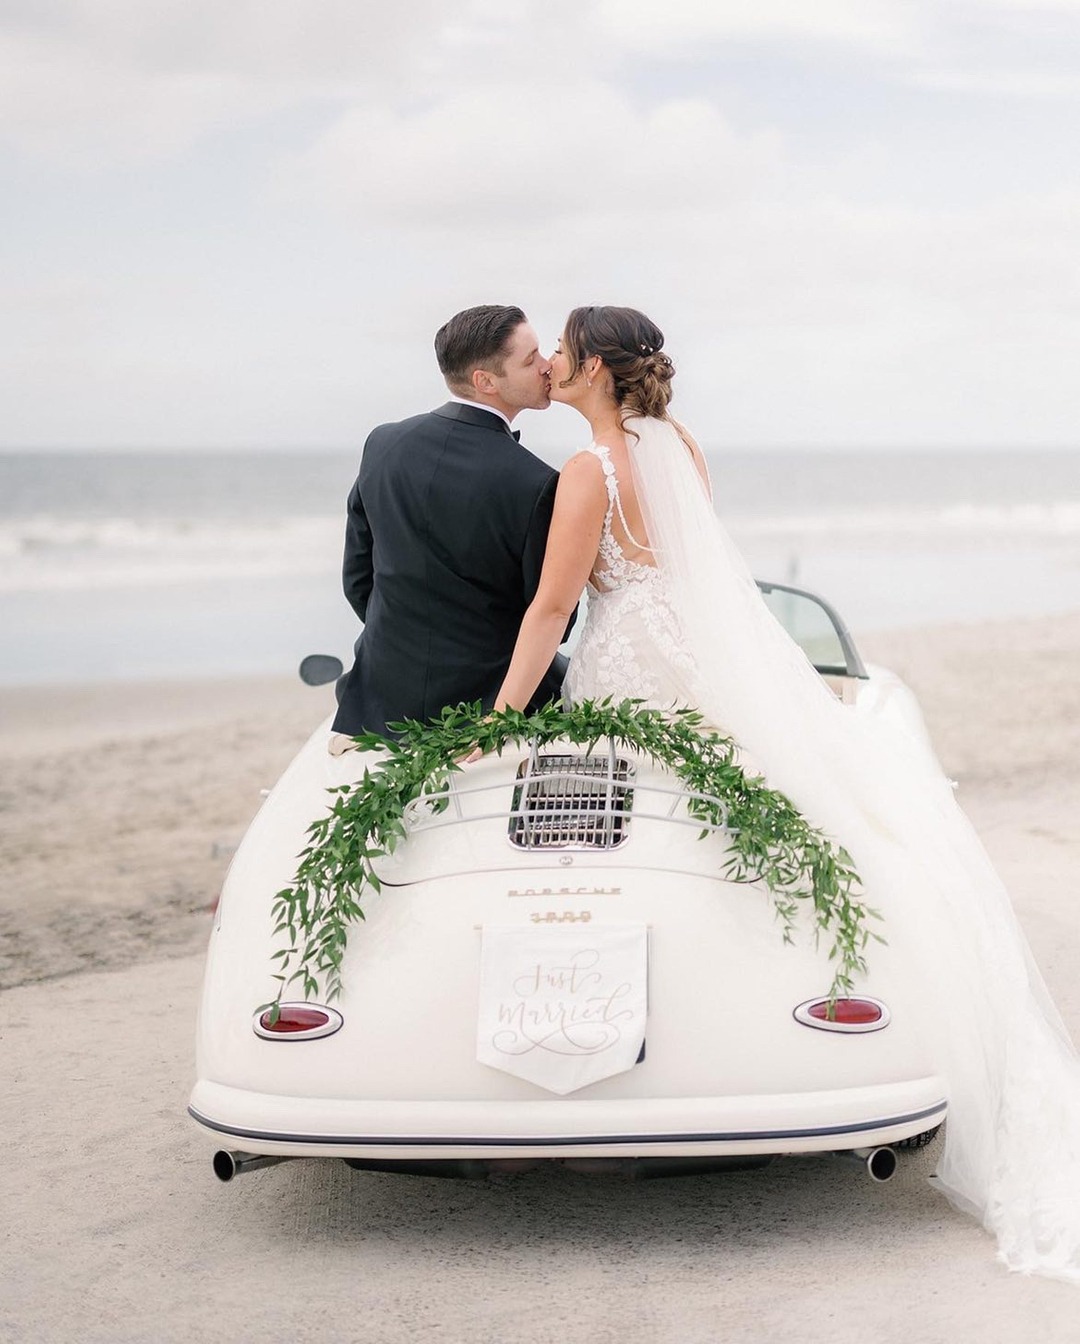  bride and groom in vintage car on beach